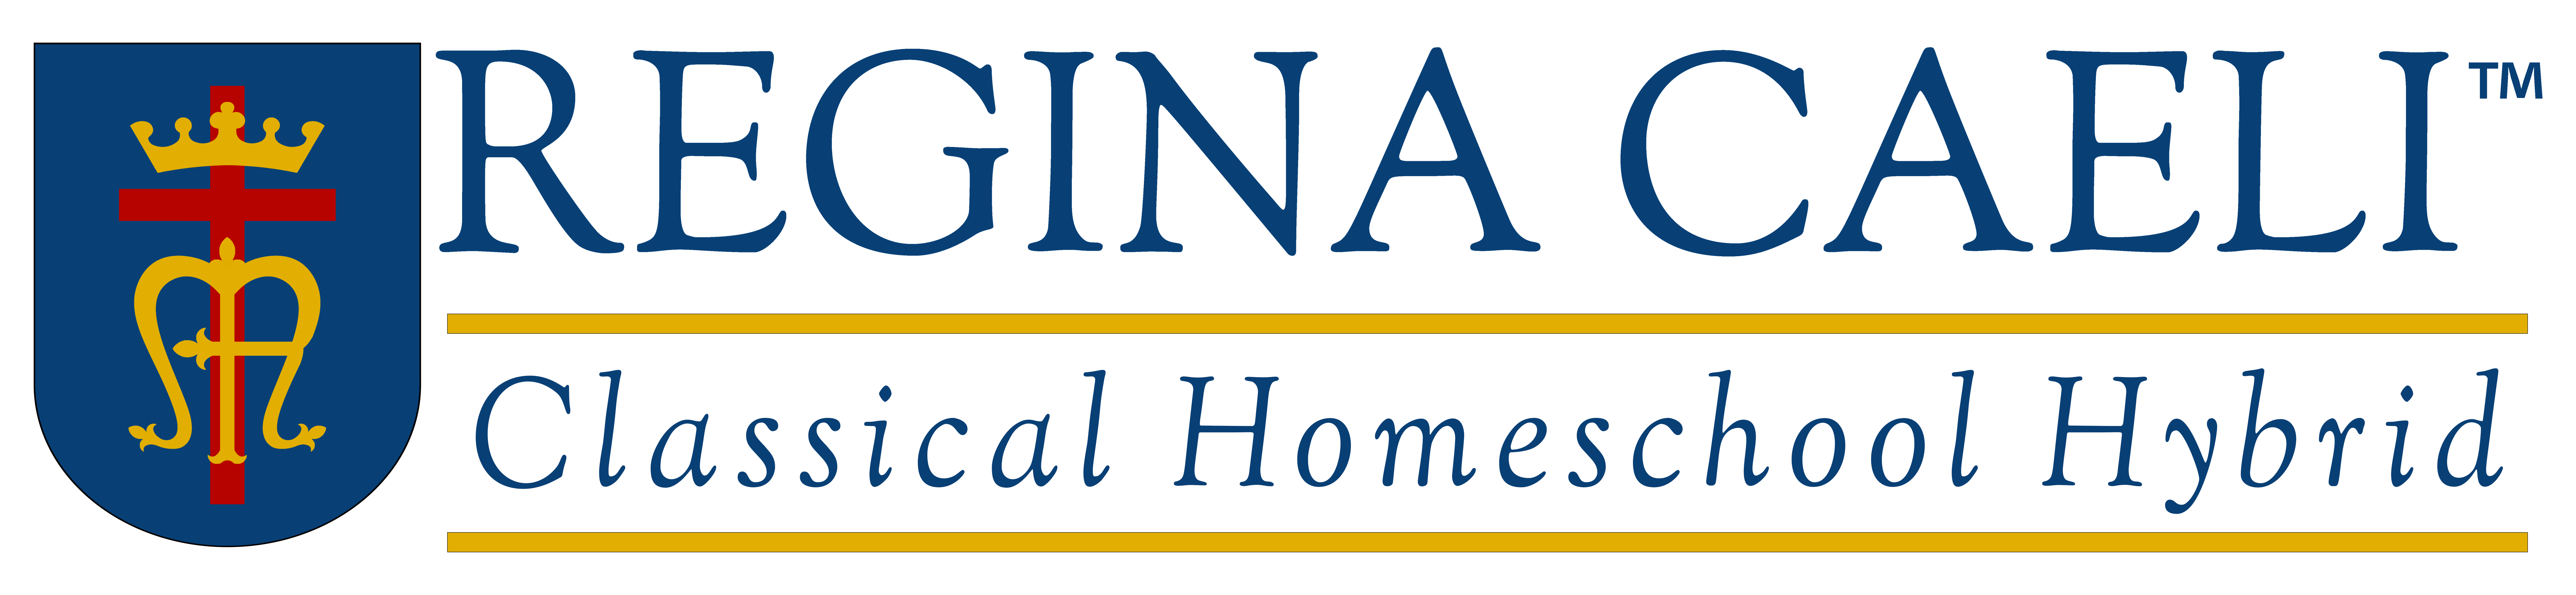 Regina Caeli Academy logo